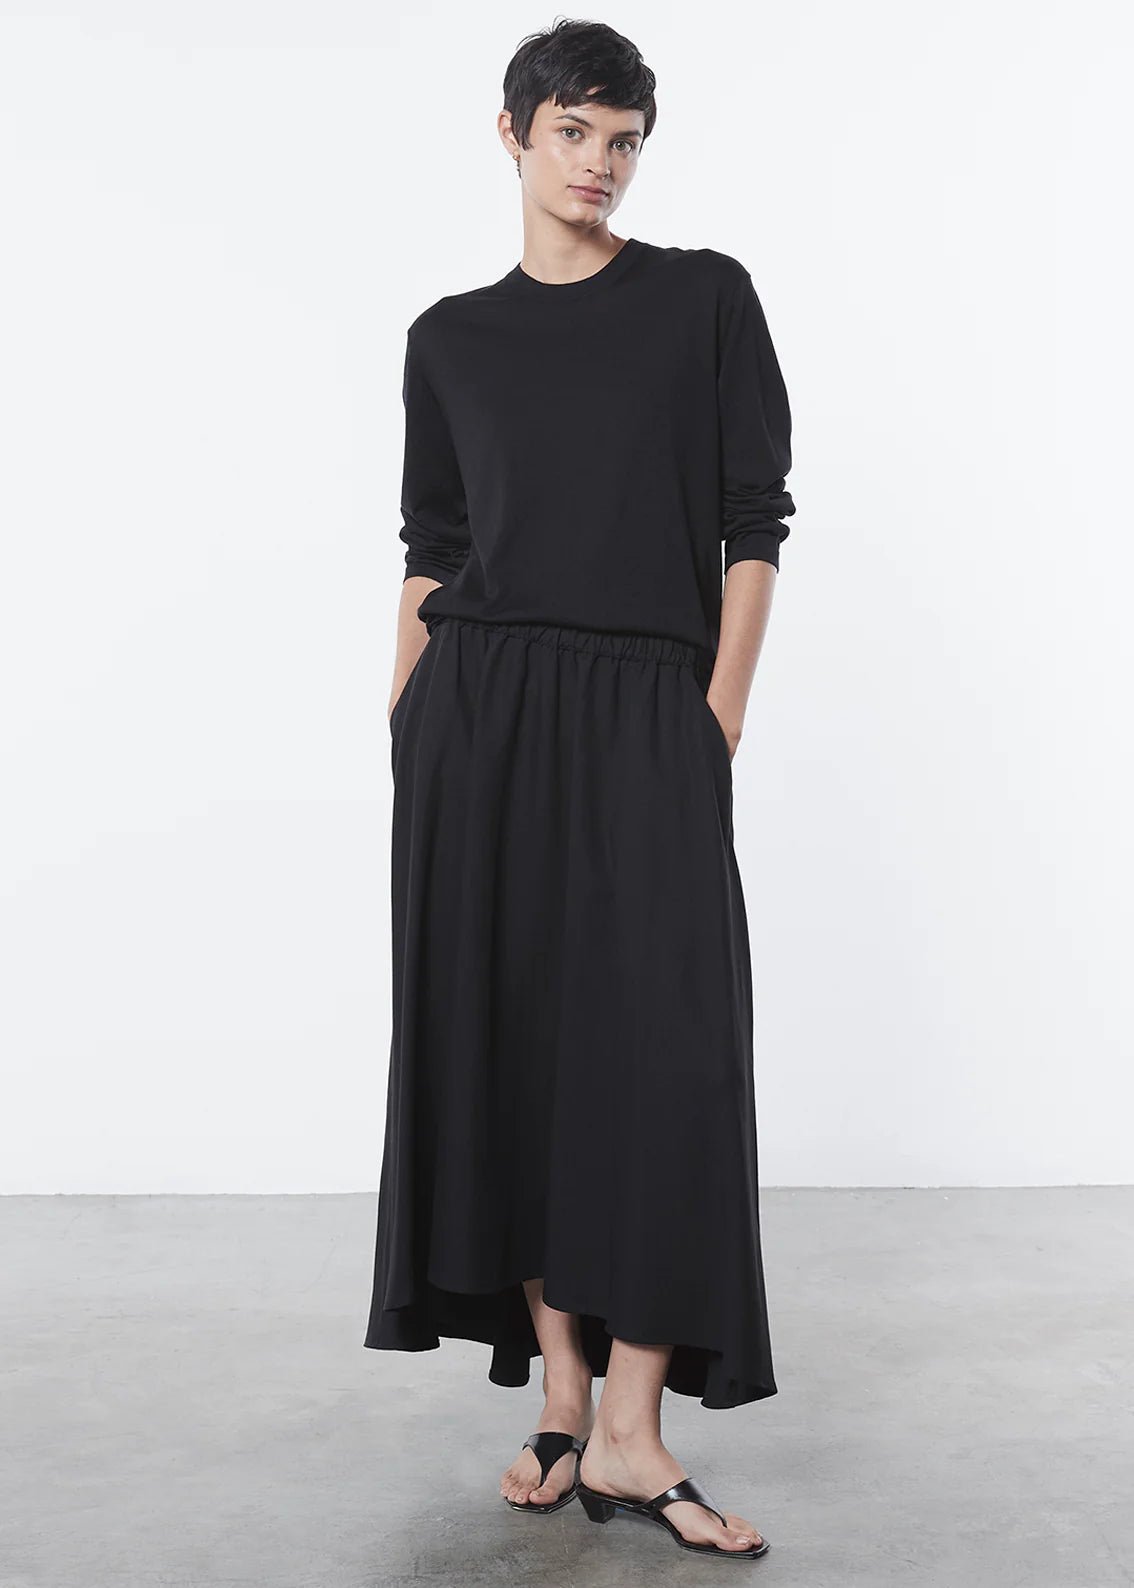 Enza Costa Twill Circle Skirt in Black - Estilo Boutique